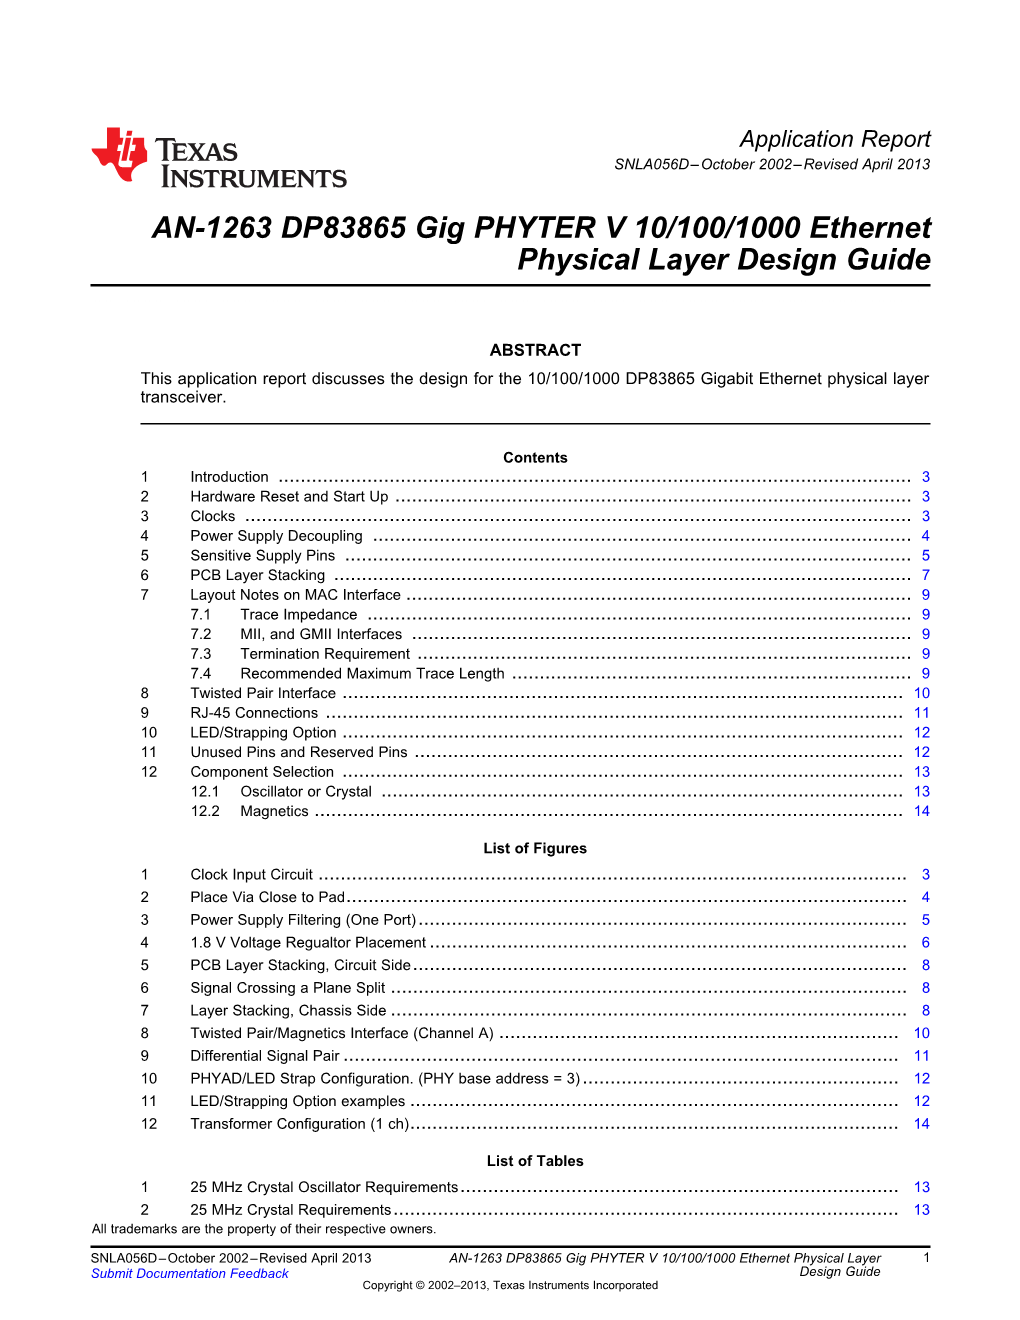 AN-1263 DP83865 Gig PHYTER V 10/100/1000 Ethernet Physical Layer Design Guide